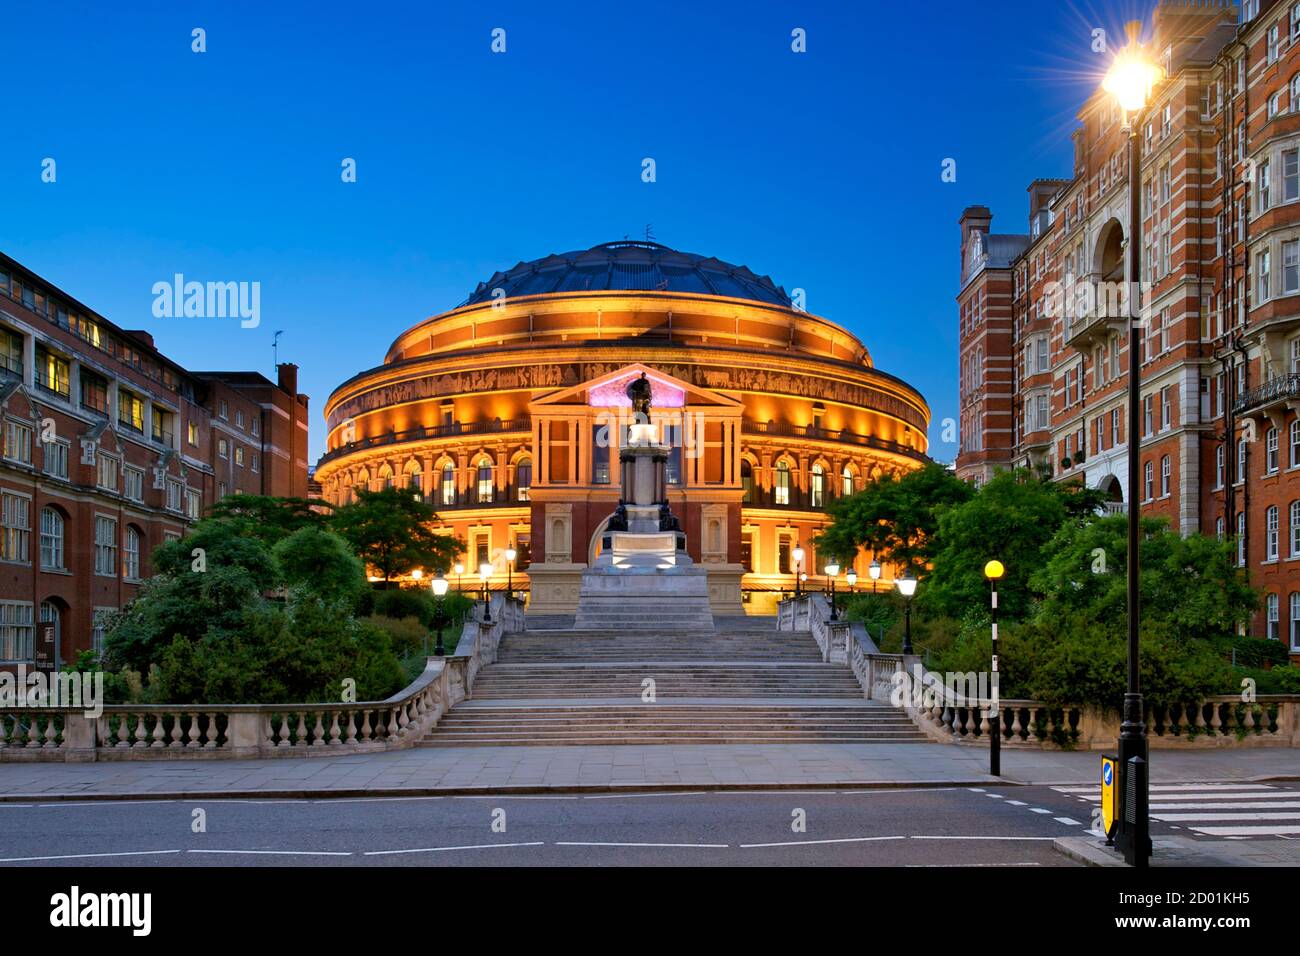 Die Royal Albert Hall in London in der Abenddämmerung. Stockfoto